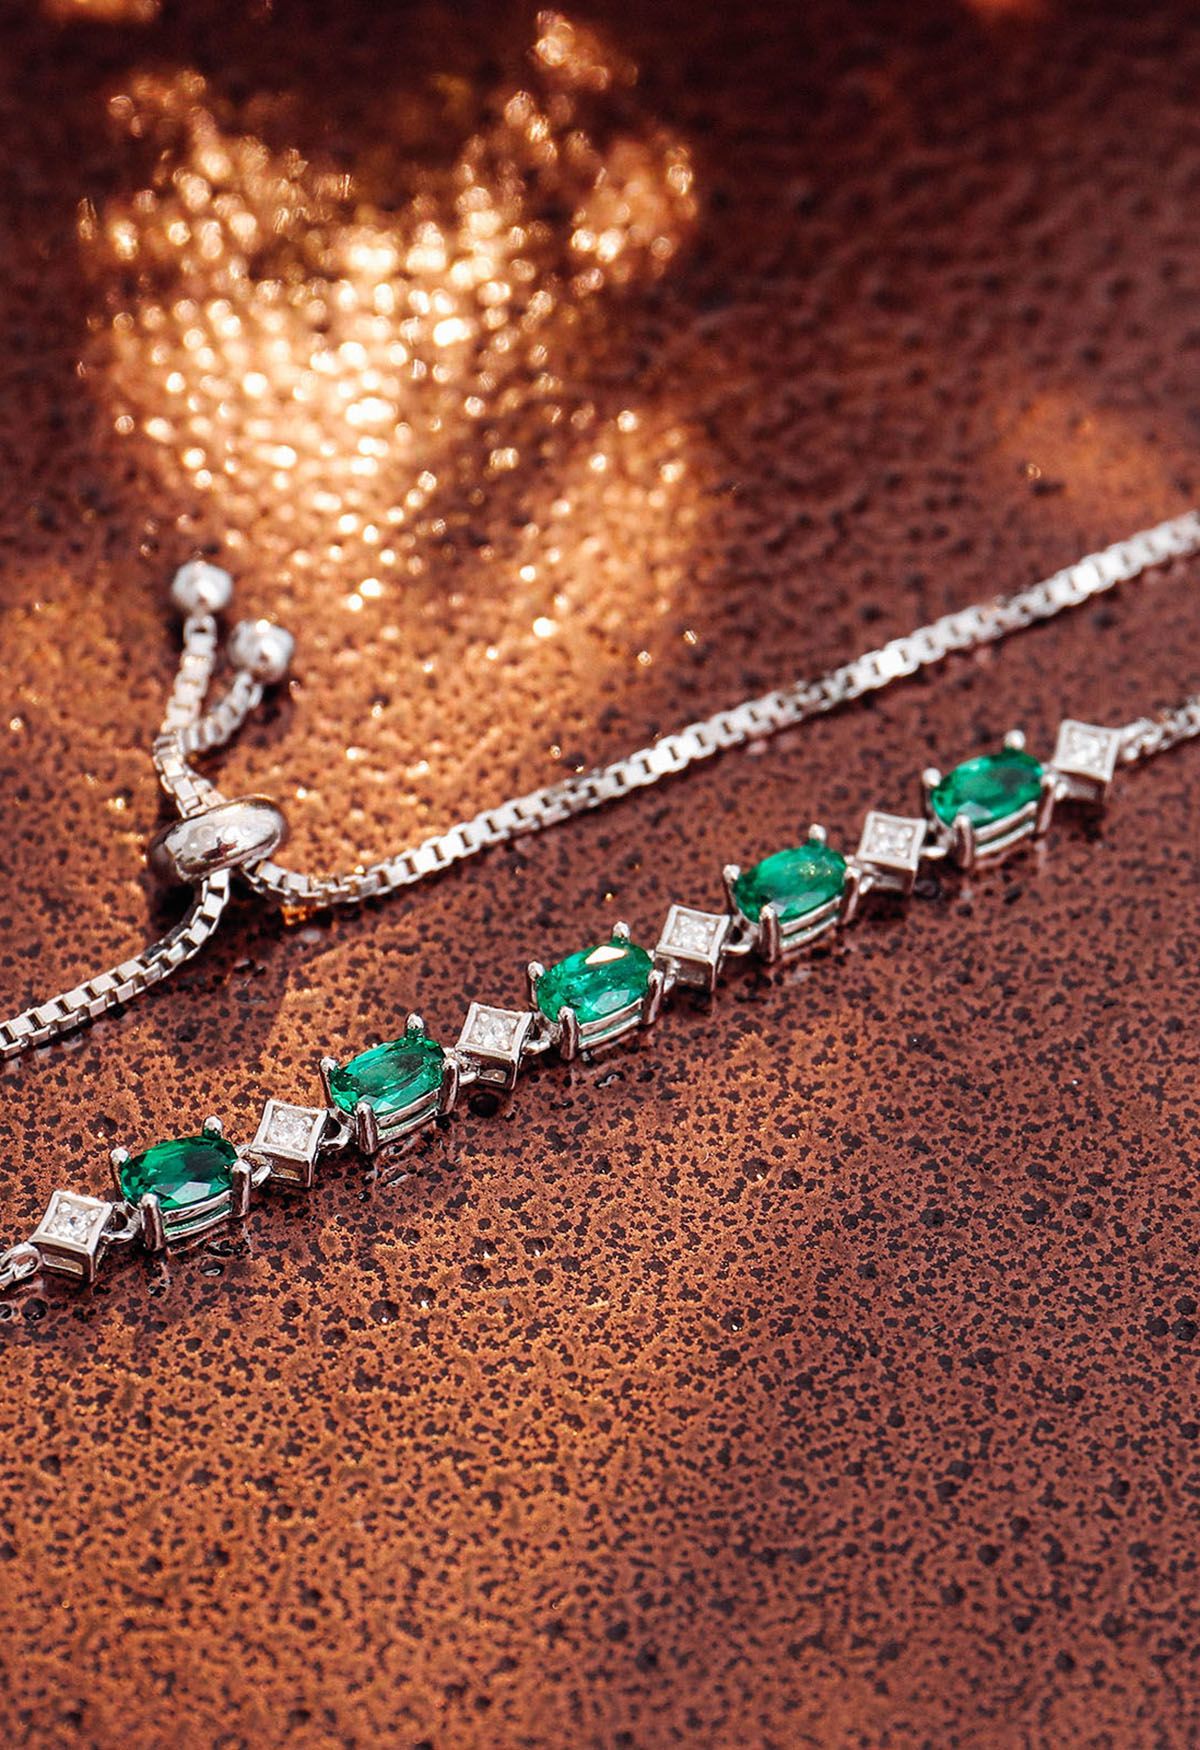 Ovales Smaragd-Edelstein-Diamant-Armband